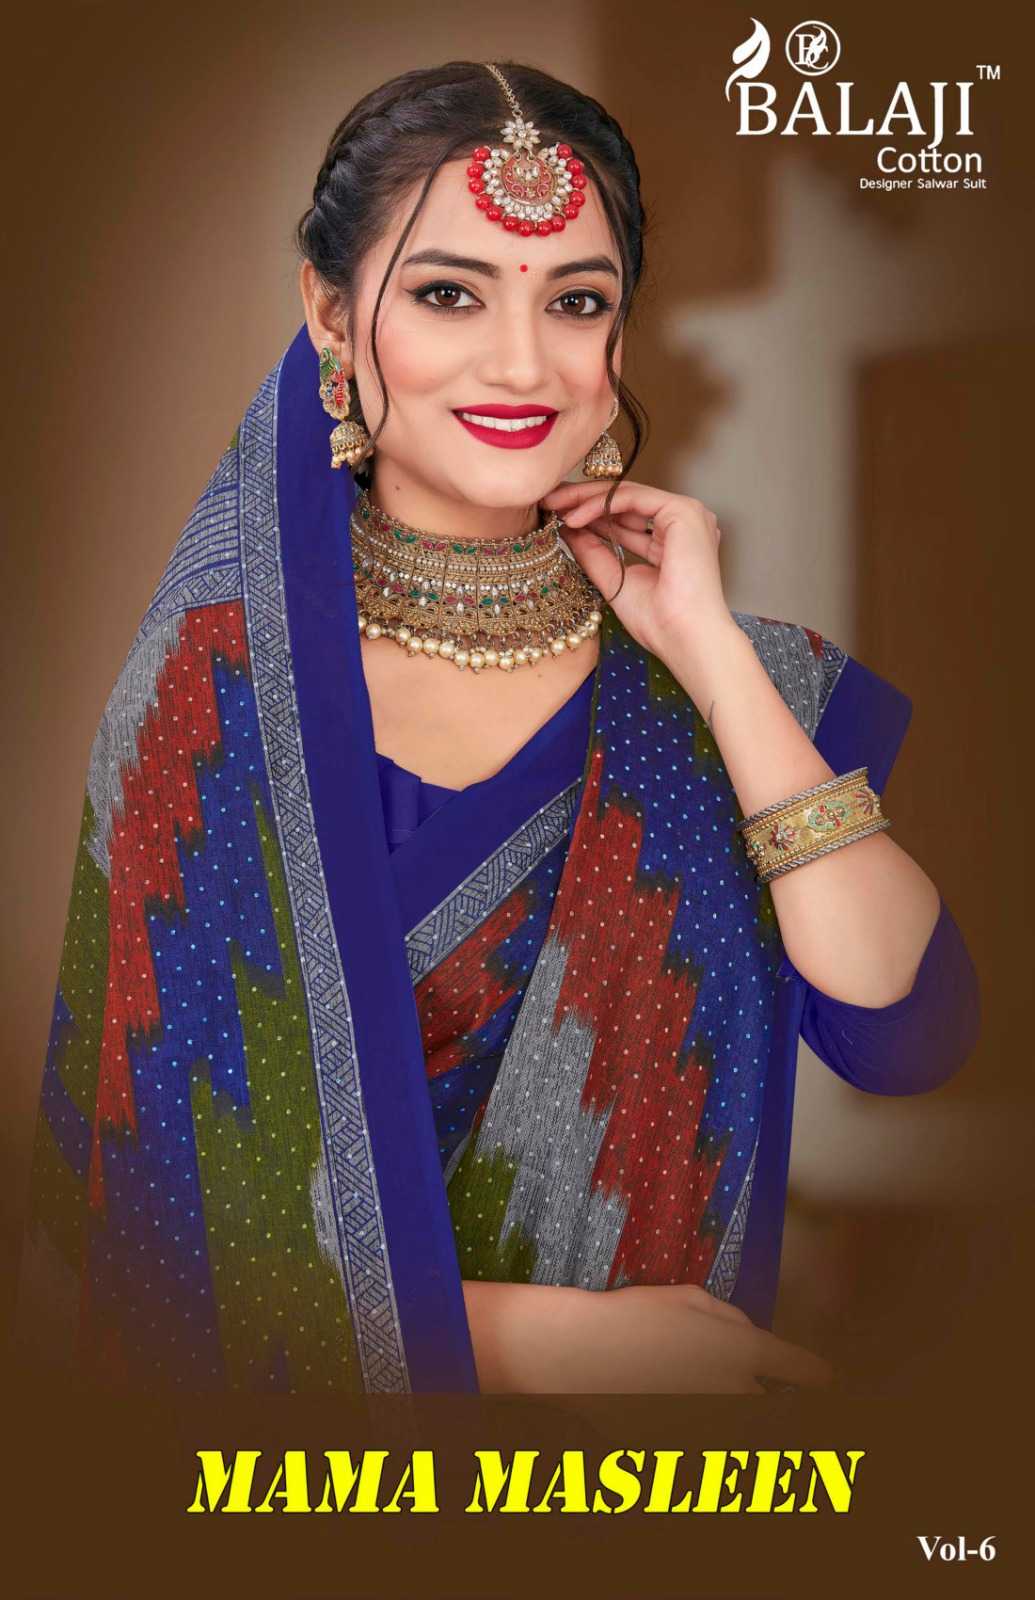 balaji cotton presents south masleen vol 2 amazing design comfy wear cotton saree 